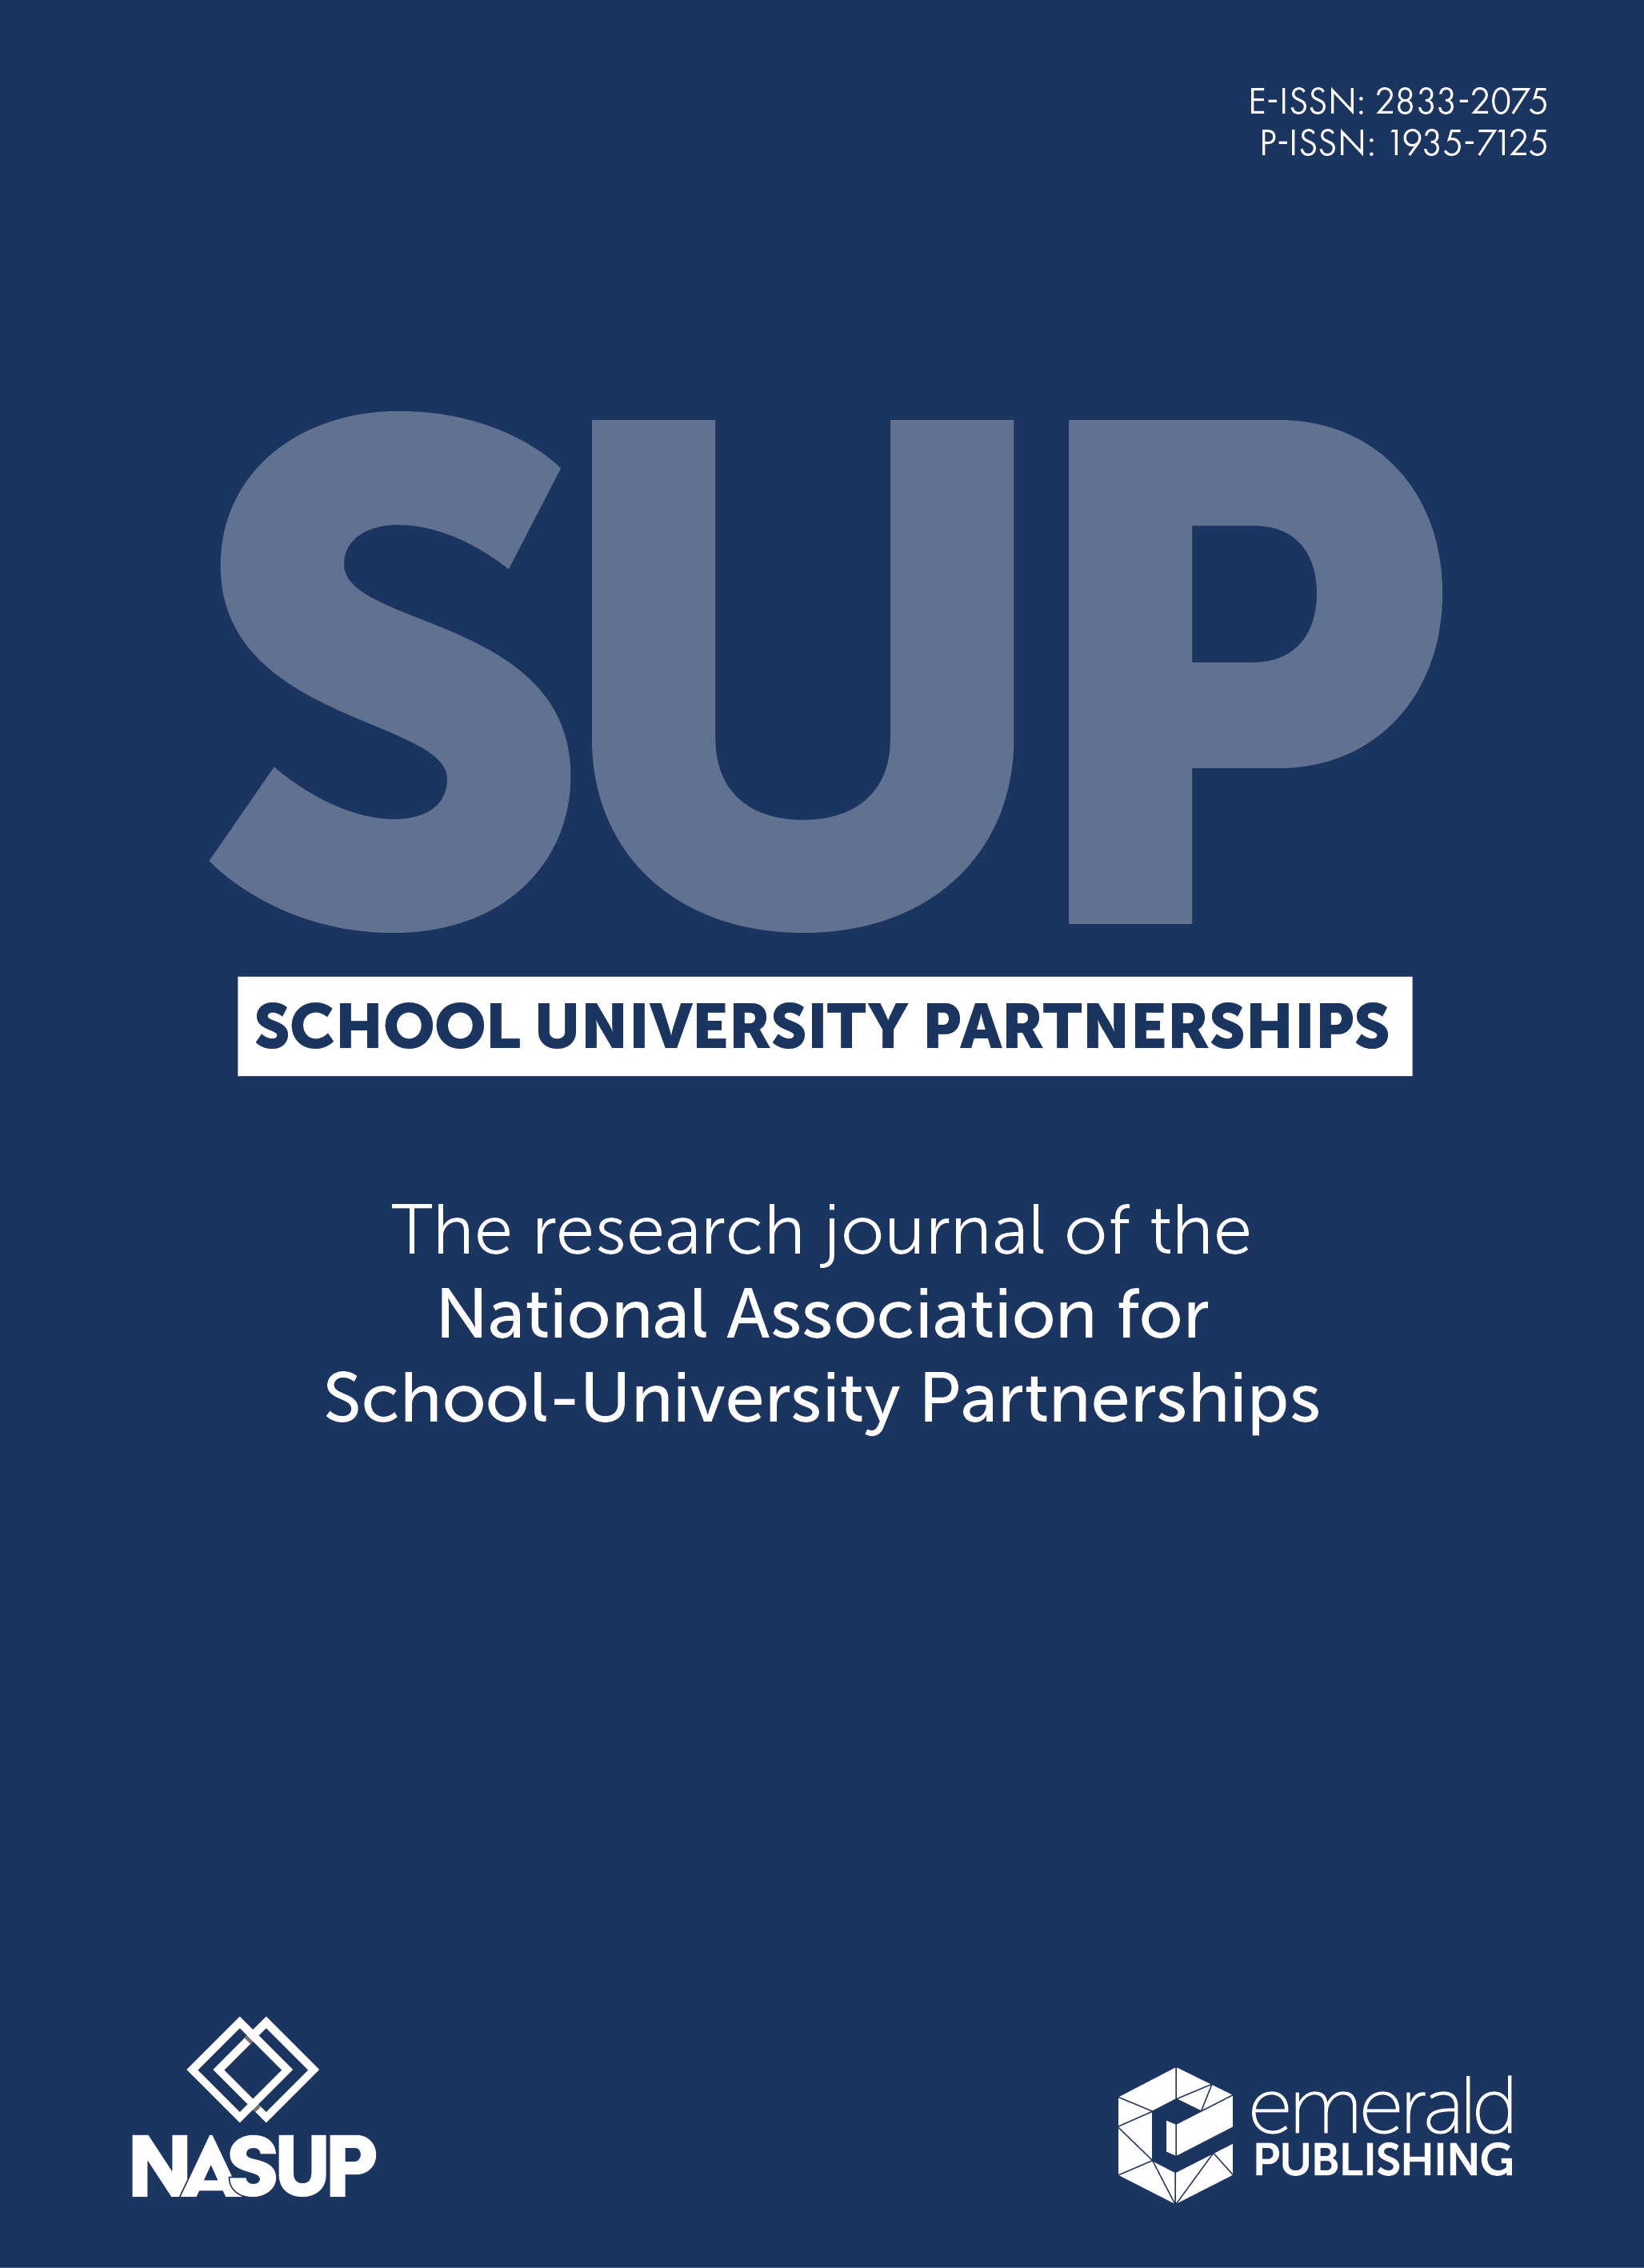 School-University Partnerships